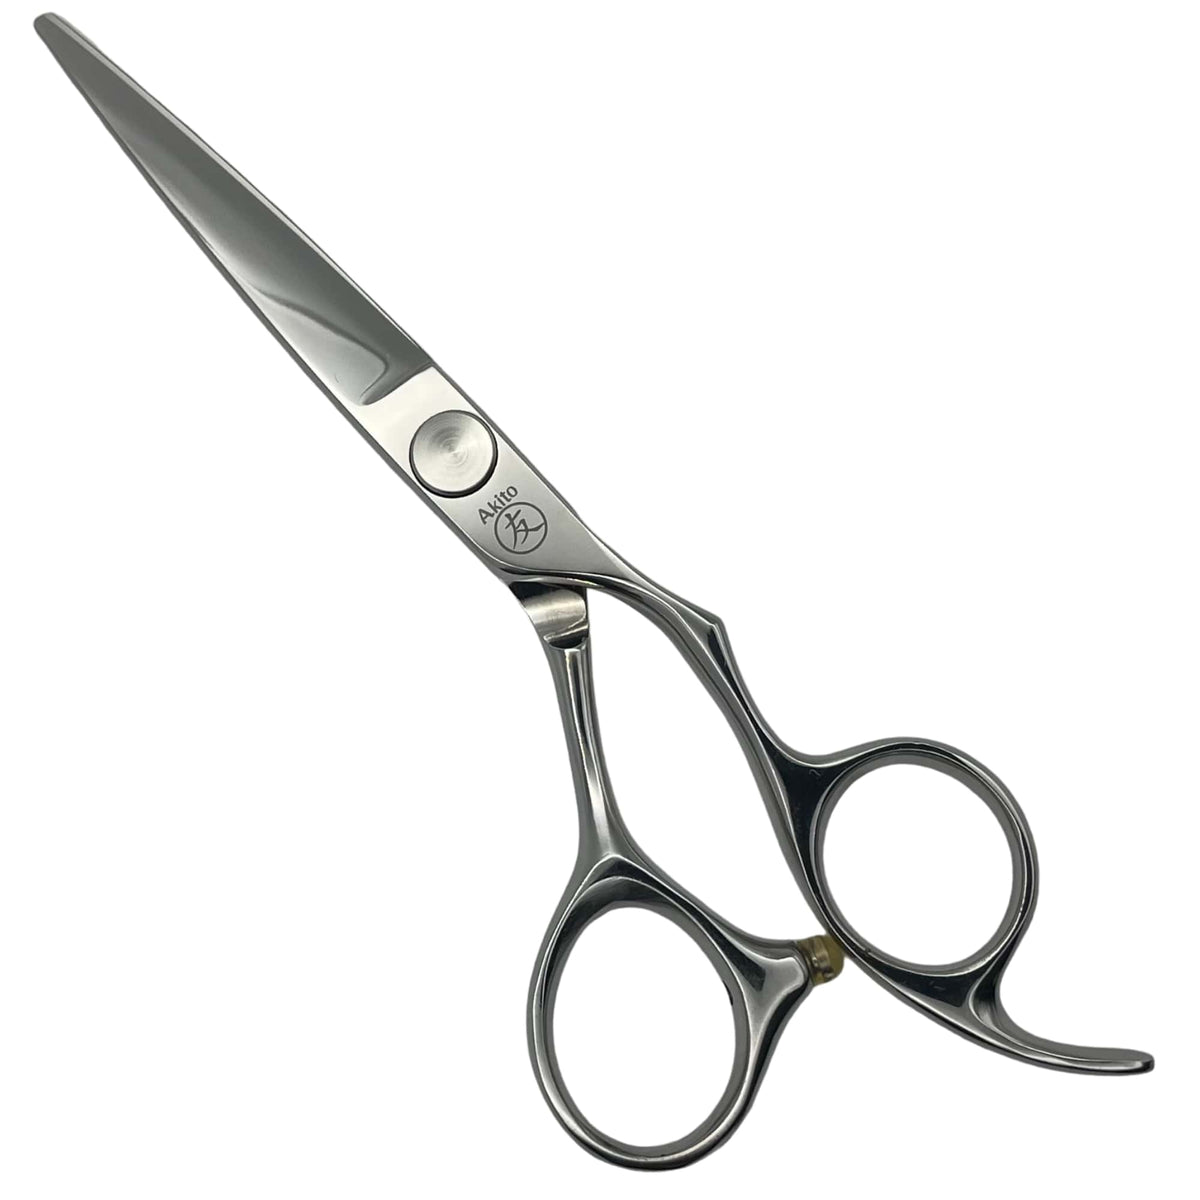 Takara 5.5 inch scissors side angle